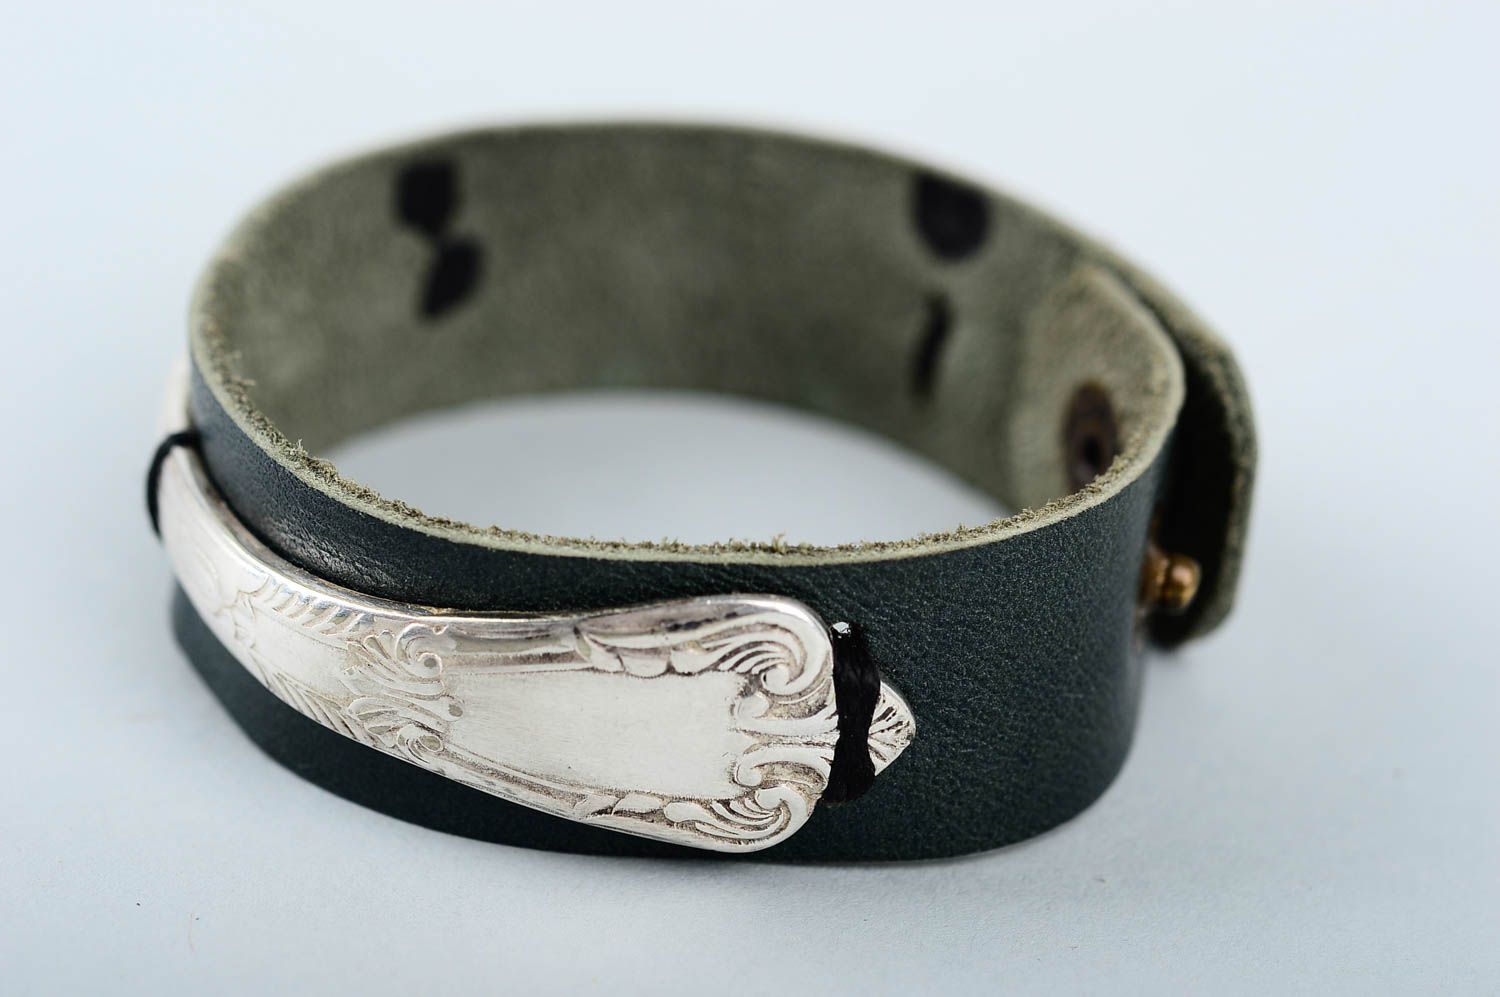 Handmade leather bracelet designs fashion accessories artisan jewelry gift ideas photo 3